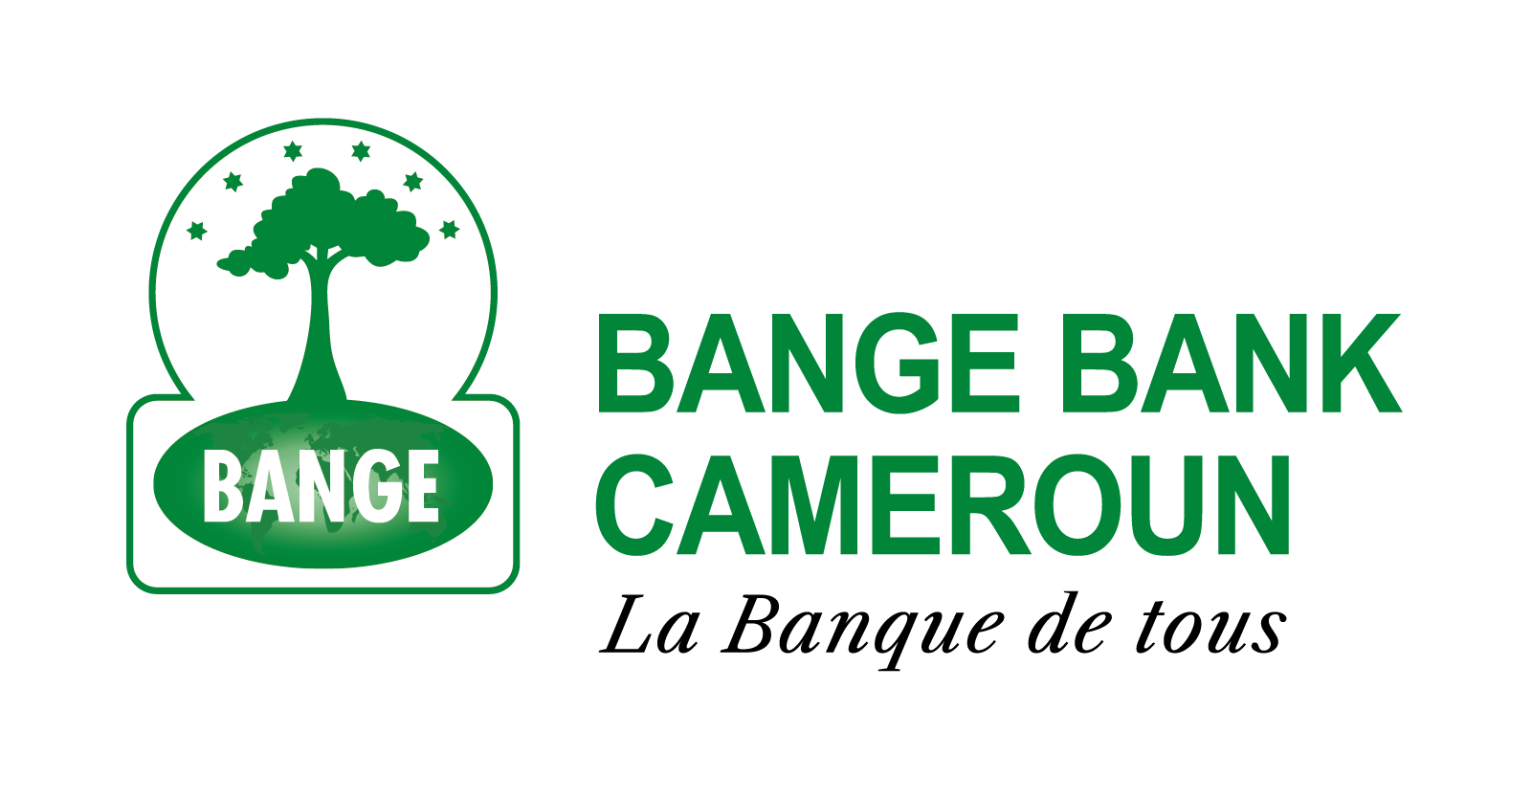 BANGE BANK CMR Company Logo